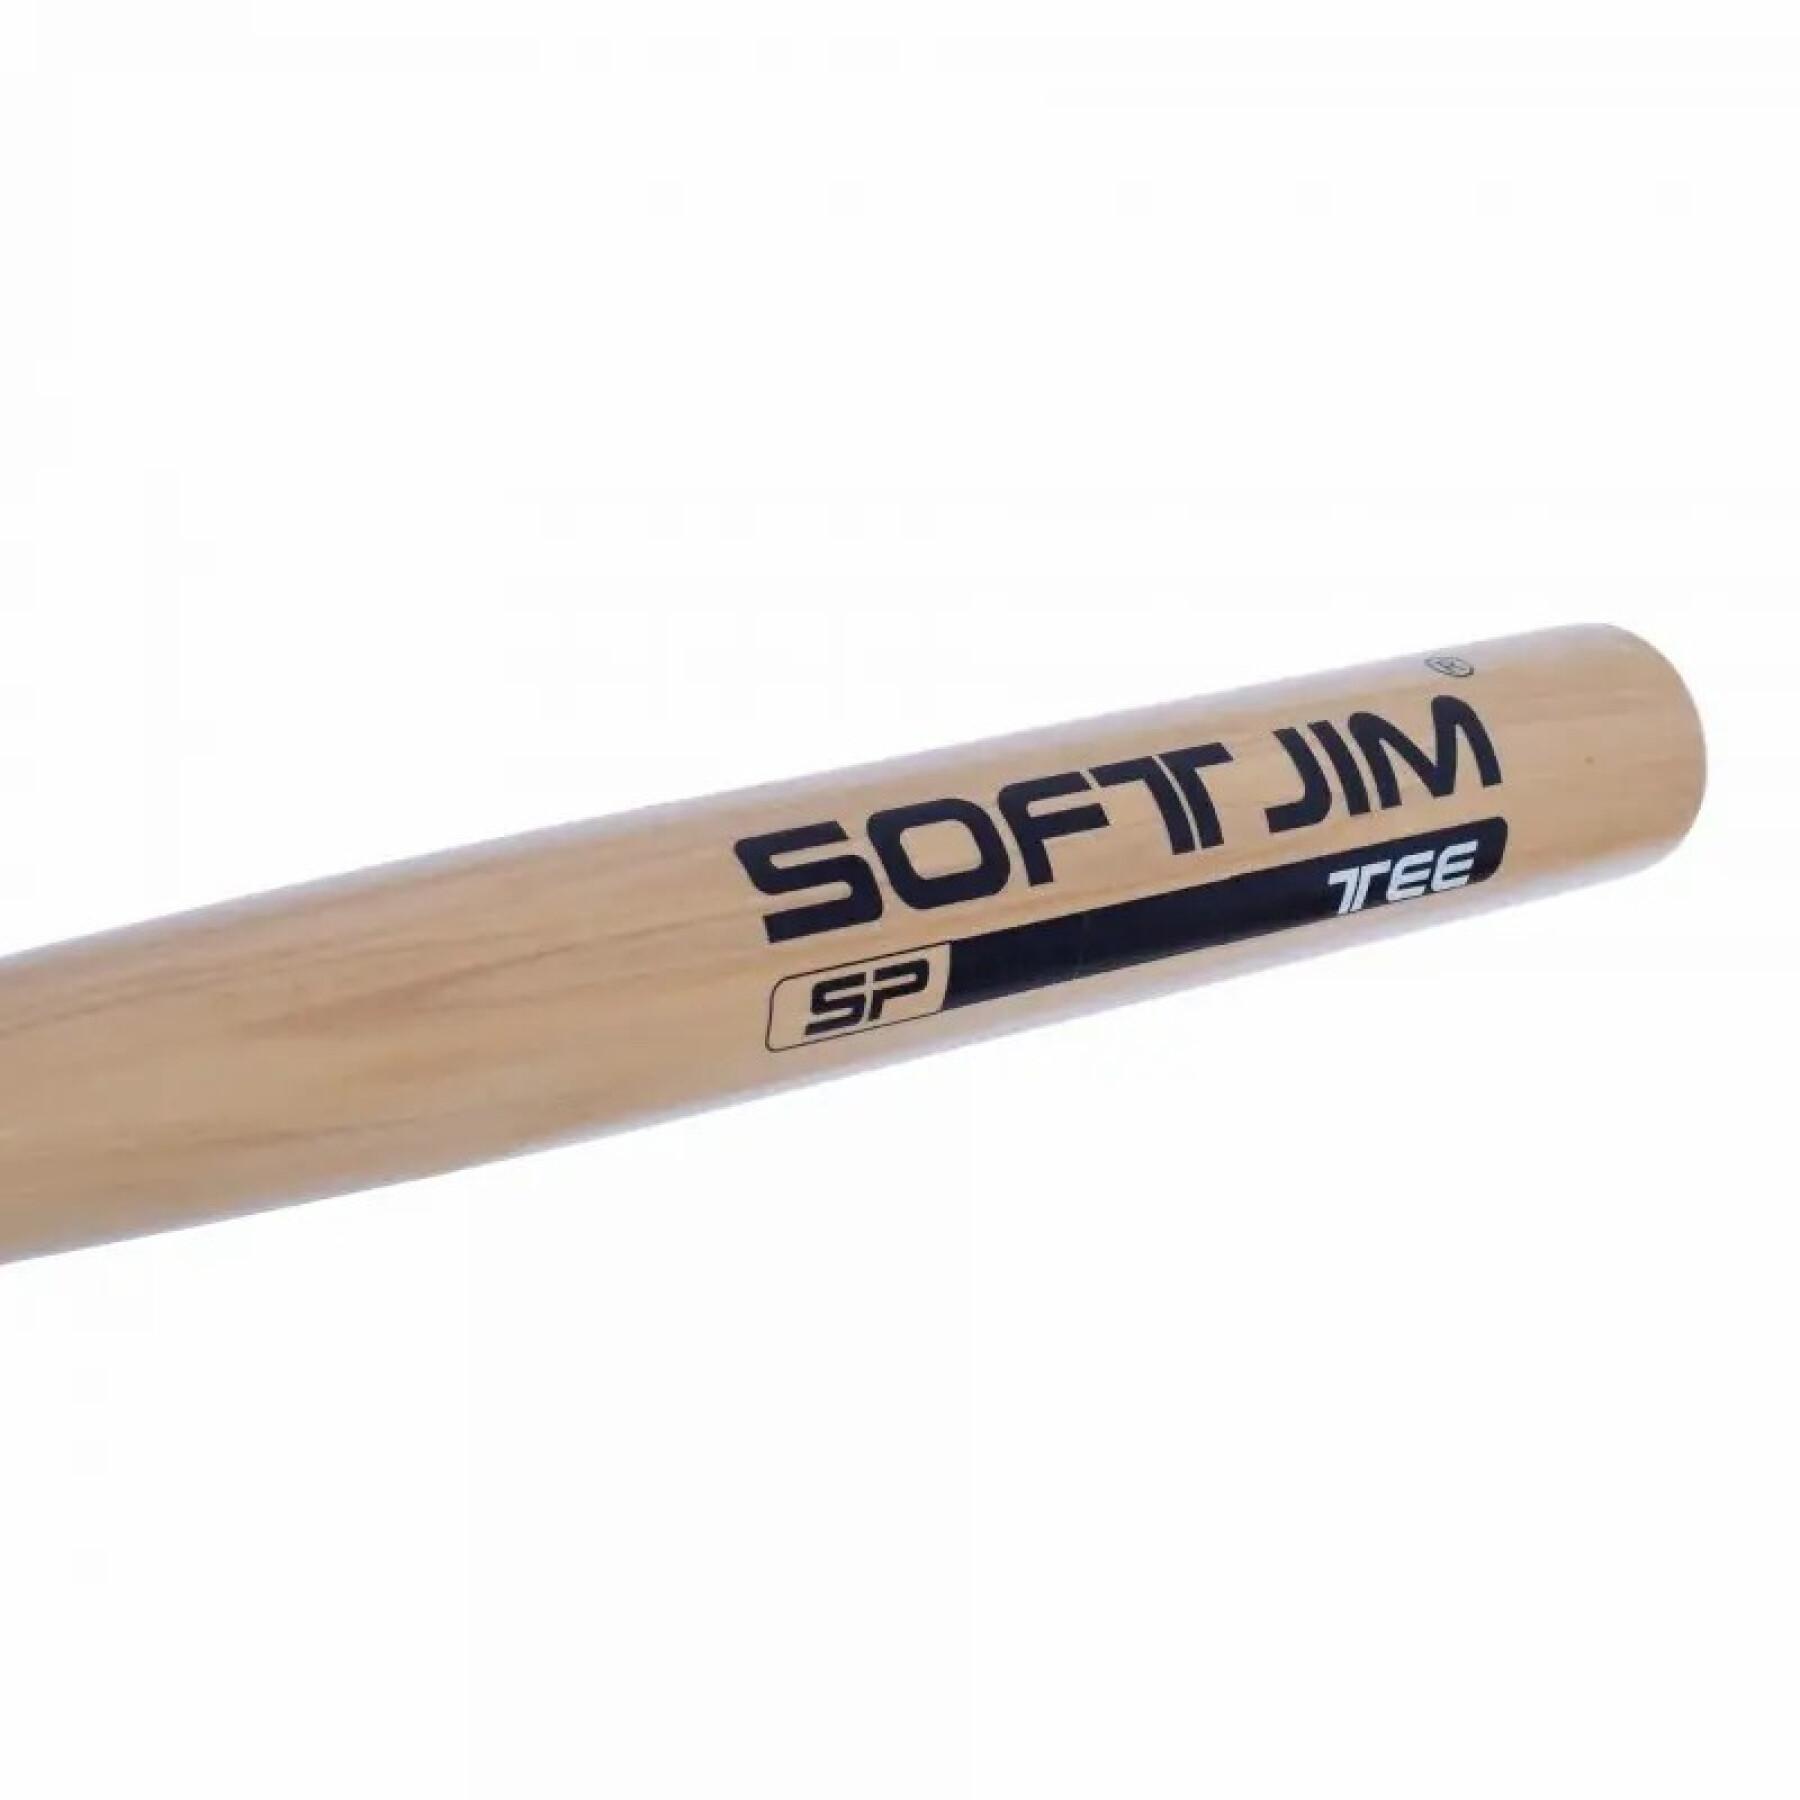 Wooden baseball bat Softee